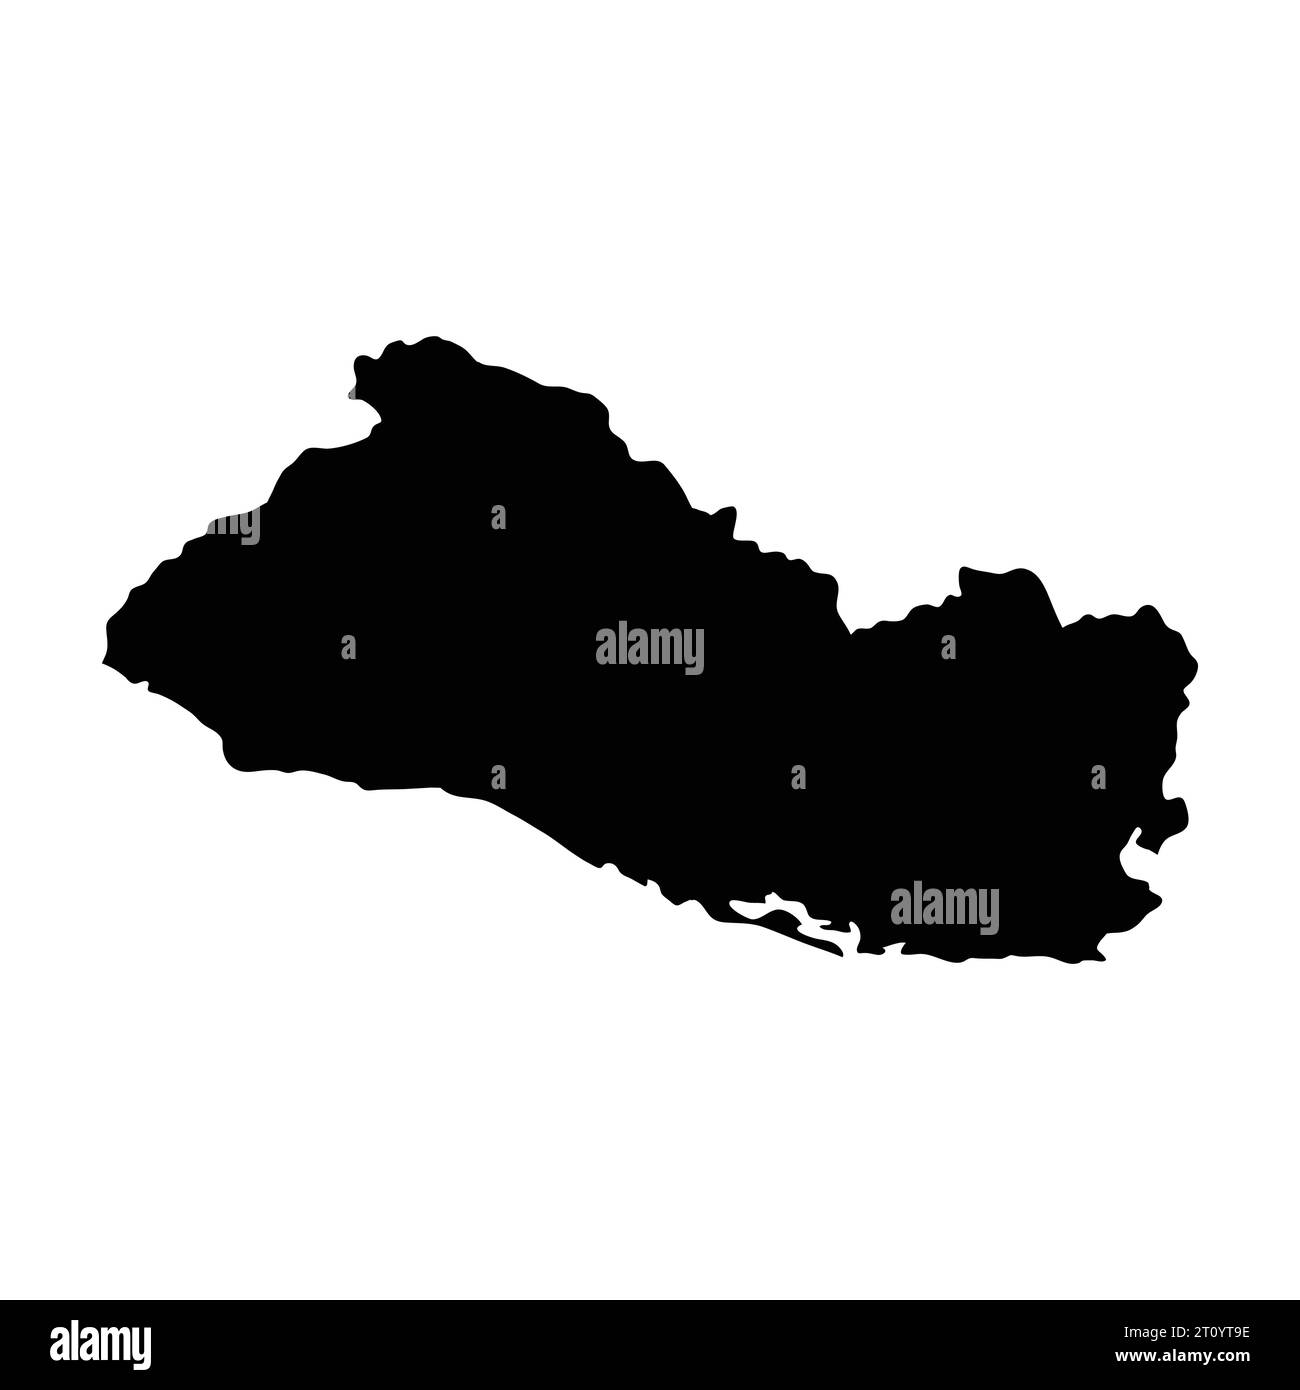 El salvador island map silhouette region territory, black shape style illustration Stock Vector